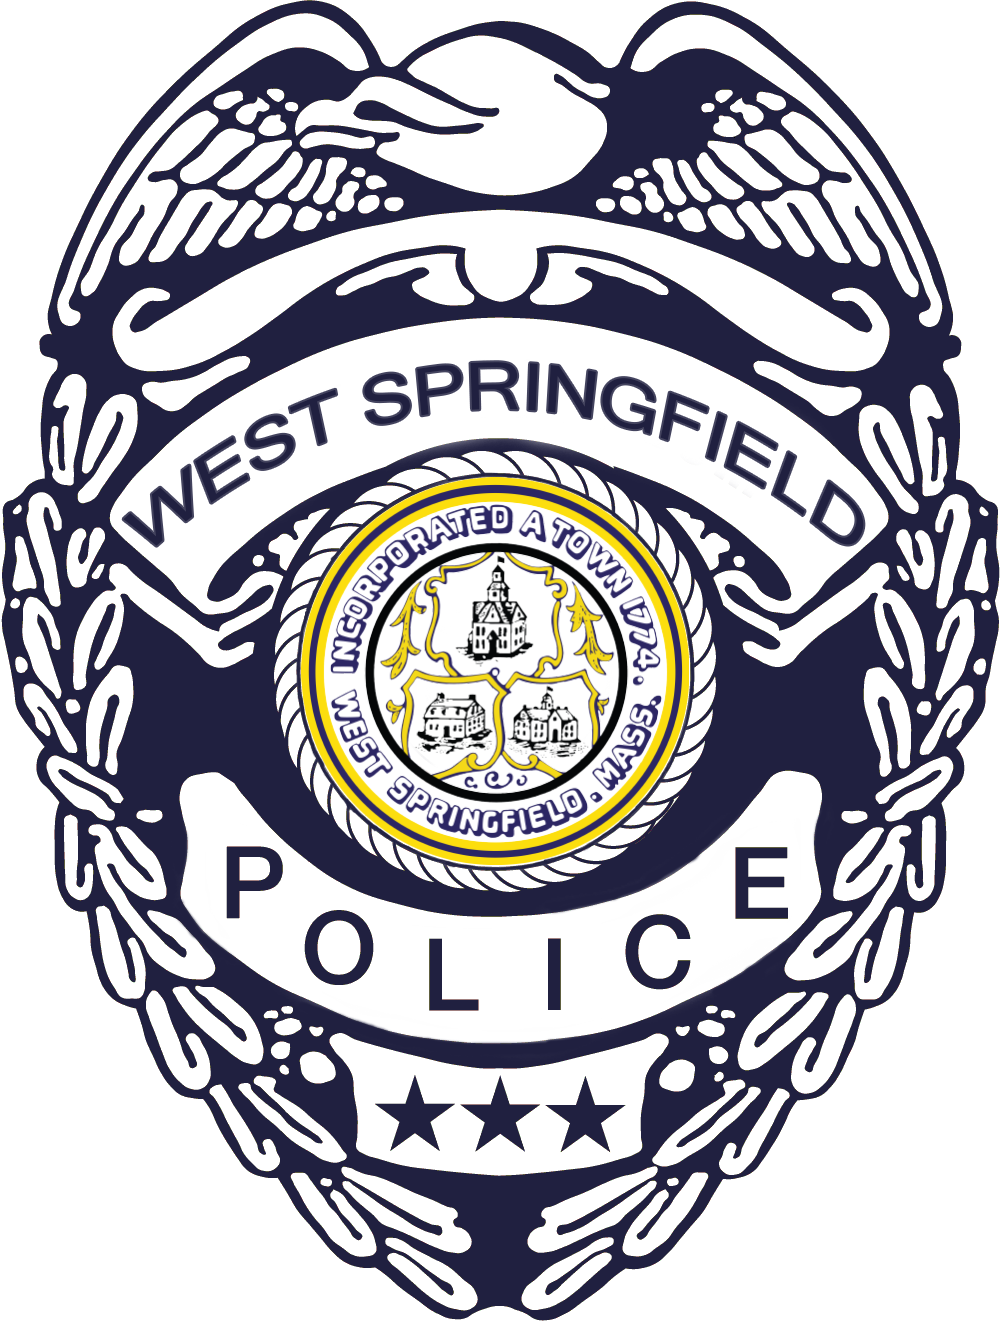 West Springfield Police logo